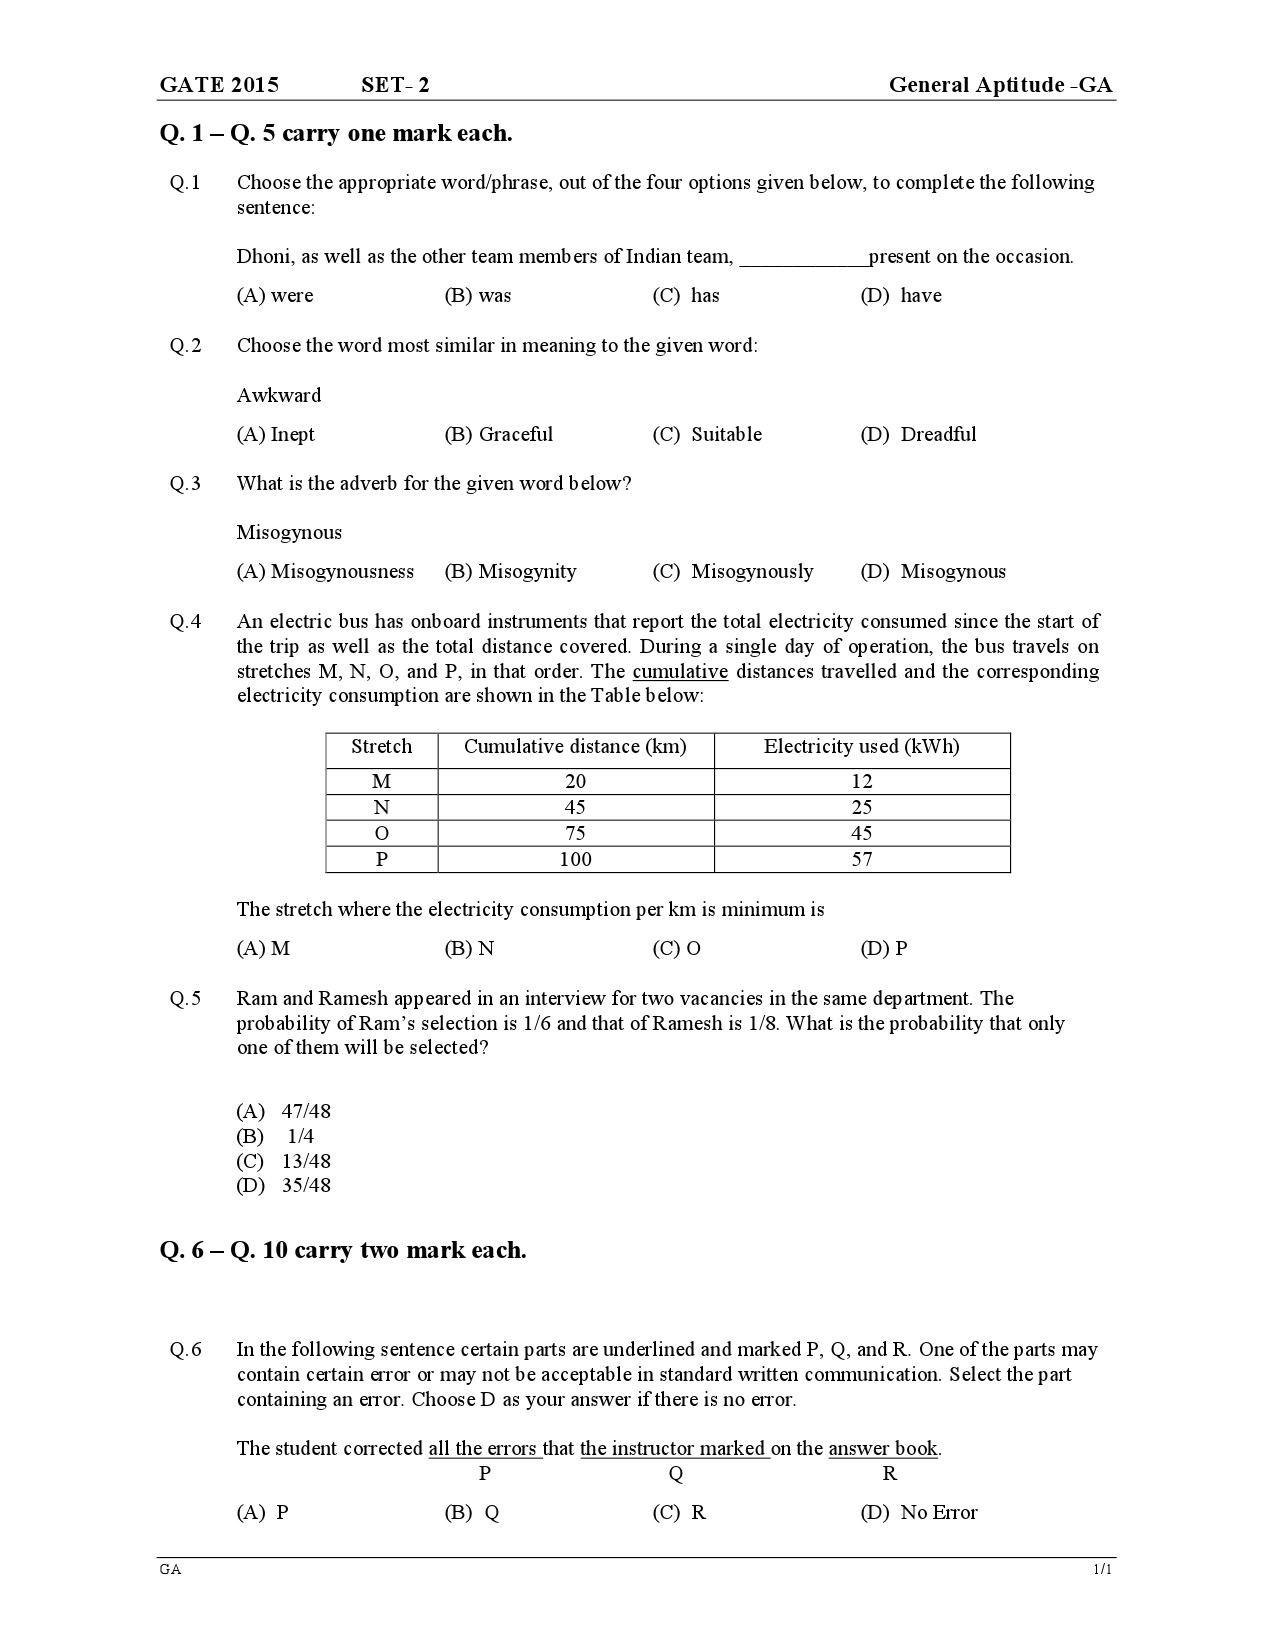 GATE Exam Question Paper 2015 General Aptitude 3